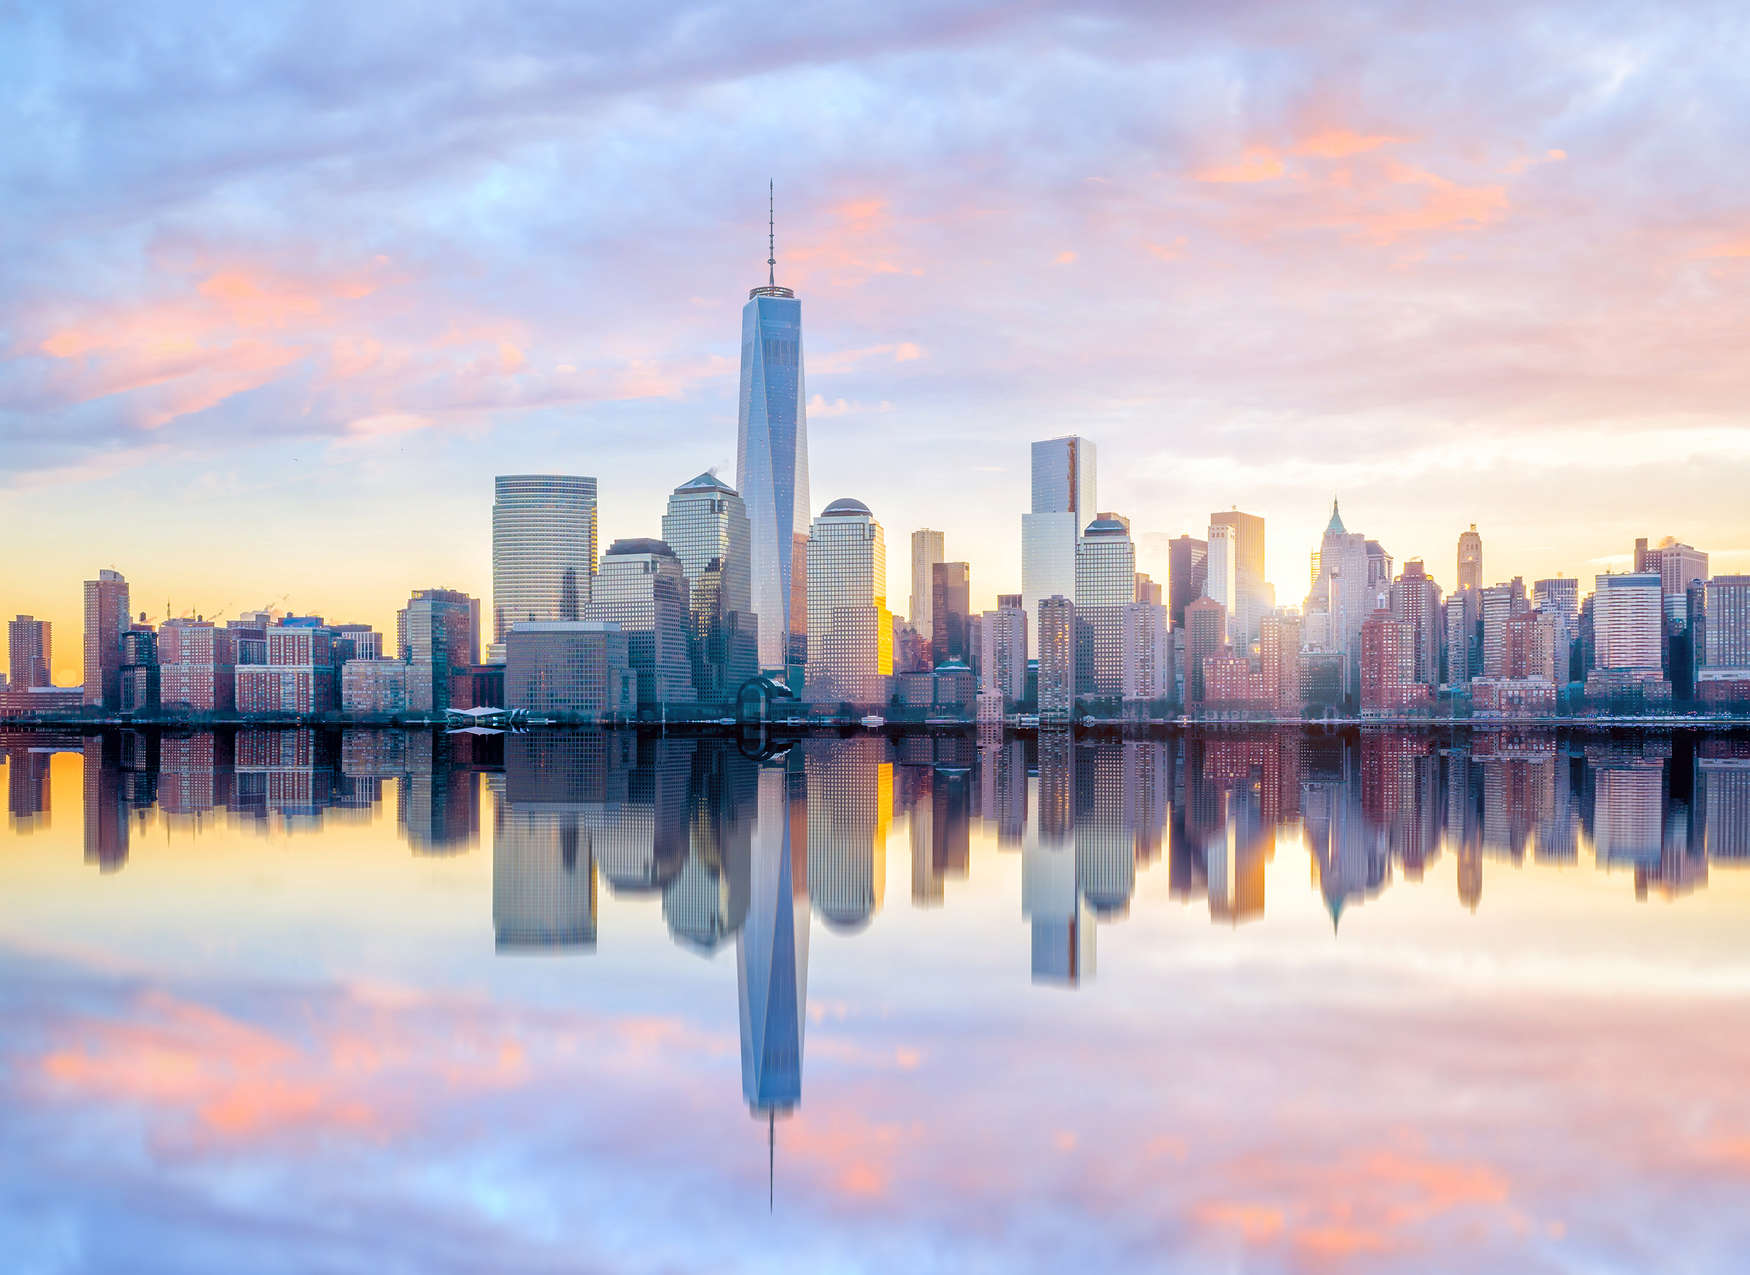             Fotomurali New York Skyline in the Morning - Blu, grigio, giallo
        